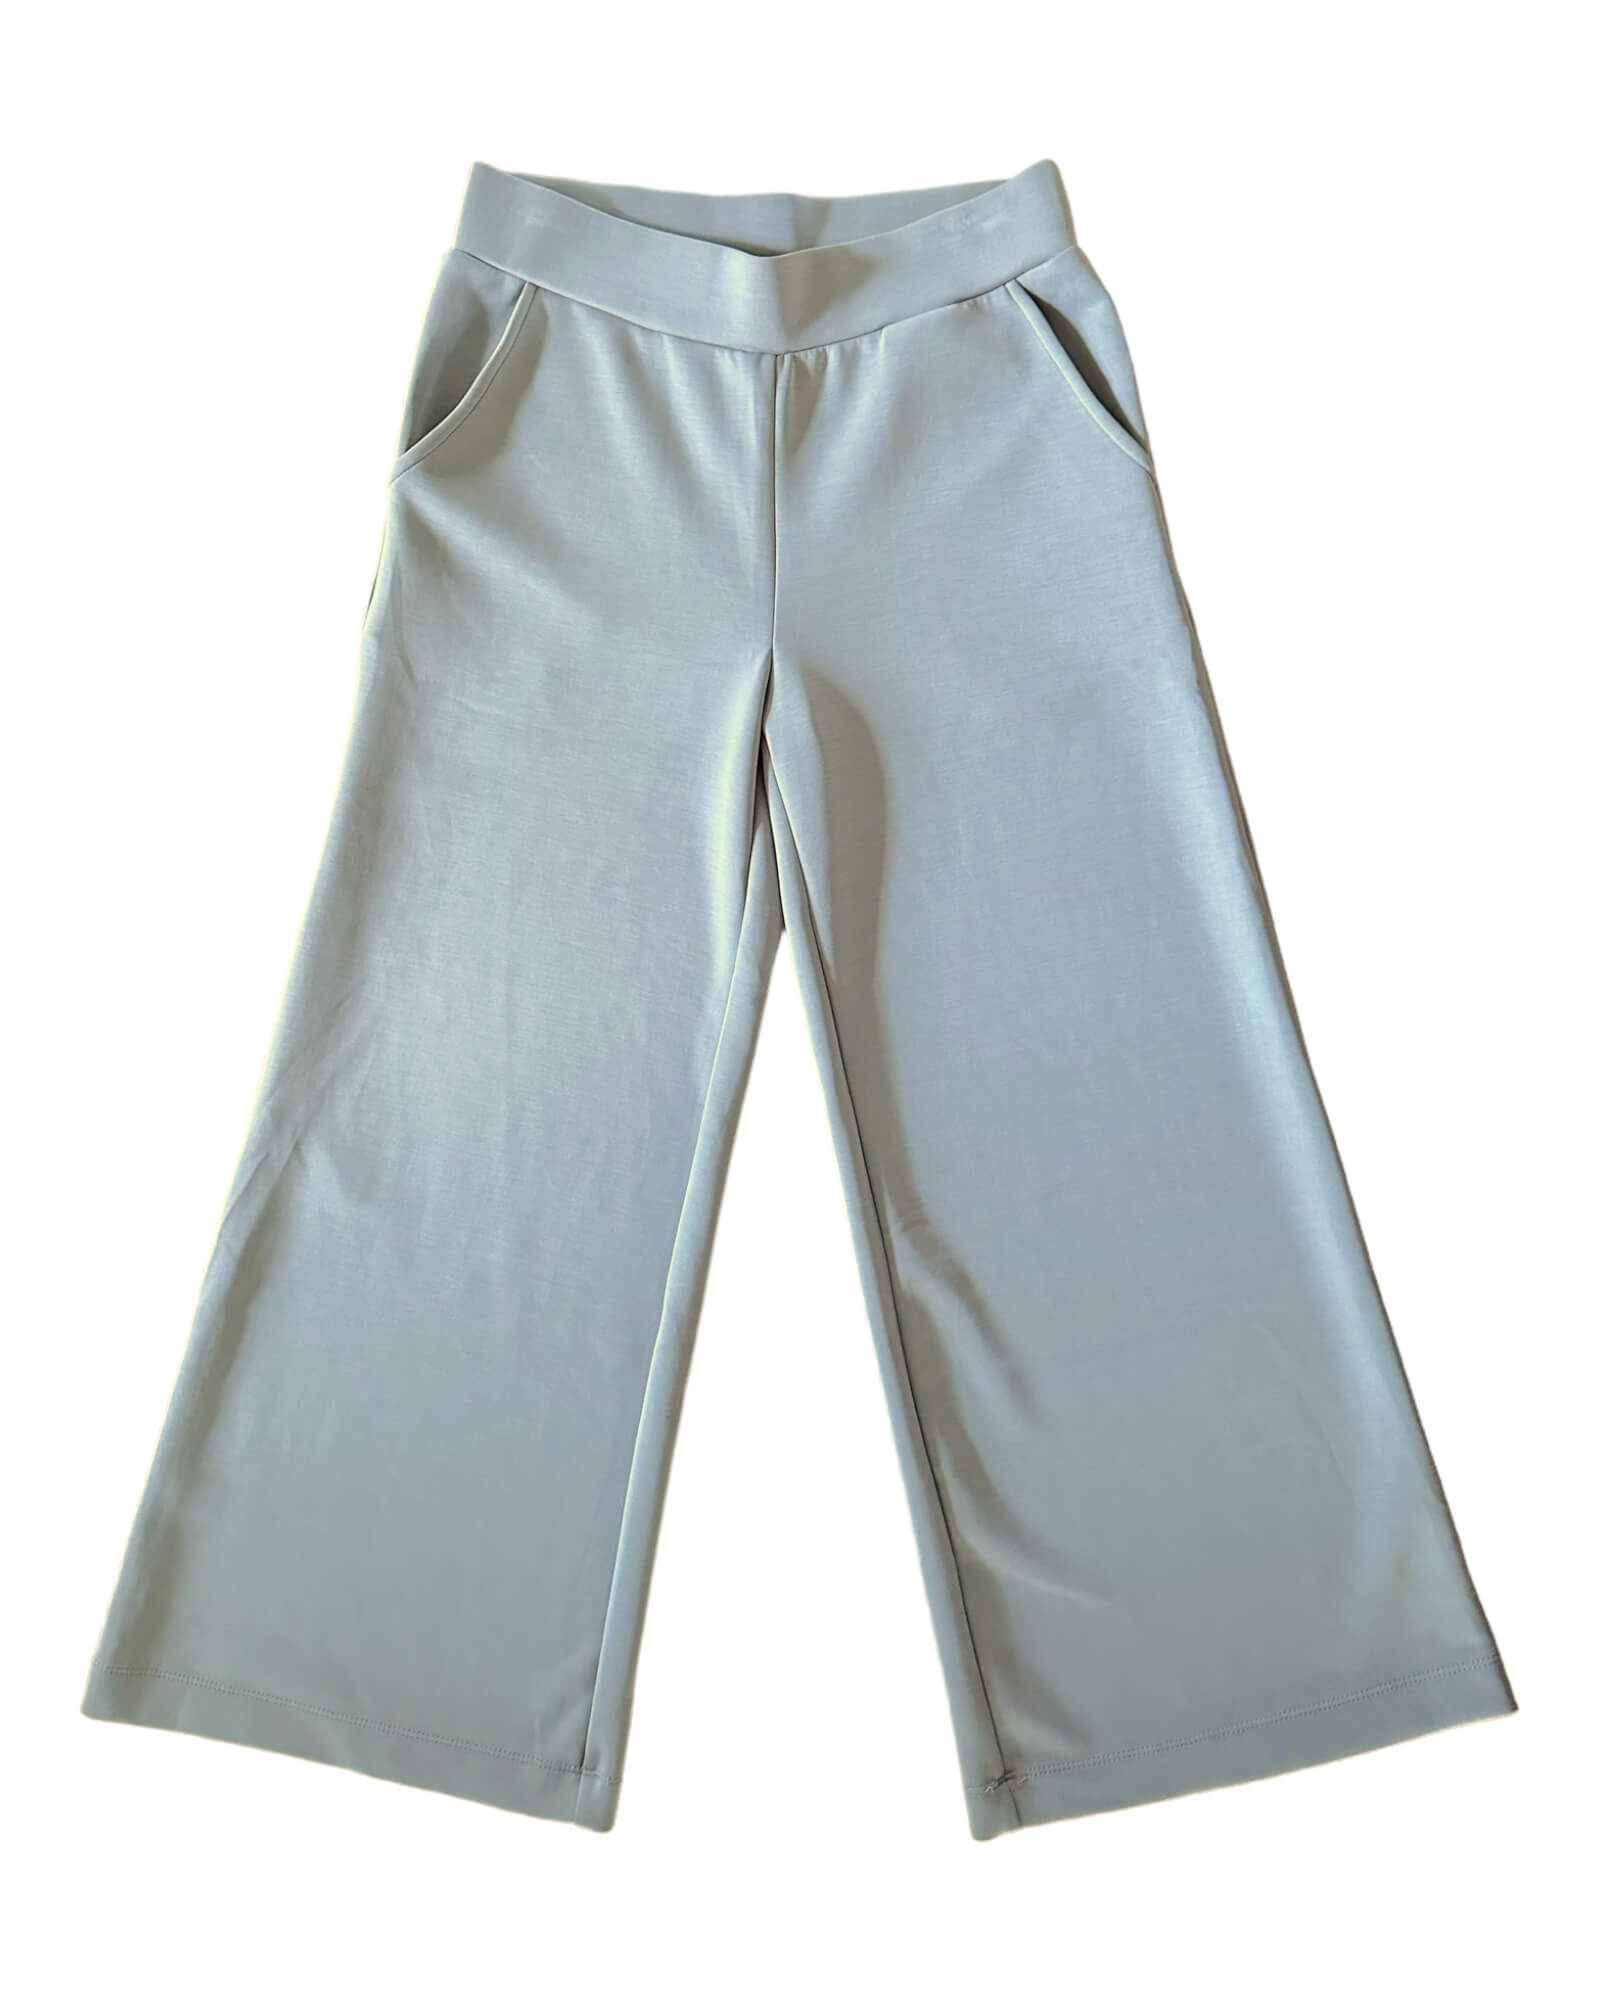 Hue Gray Capri Pants for Women